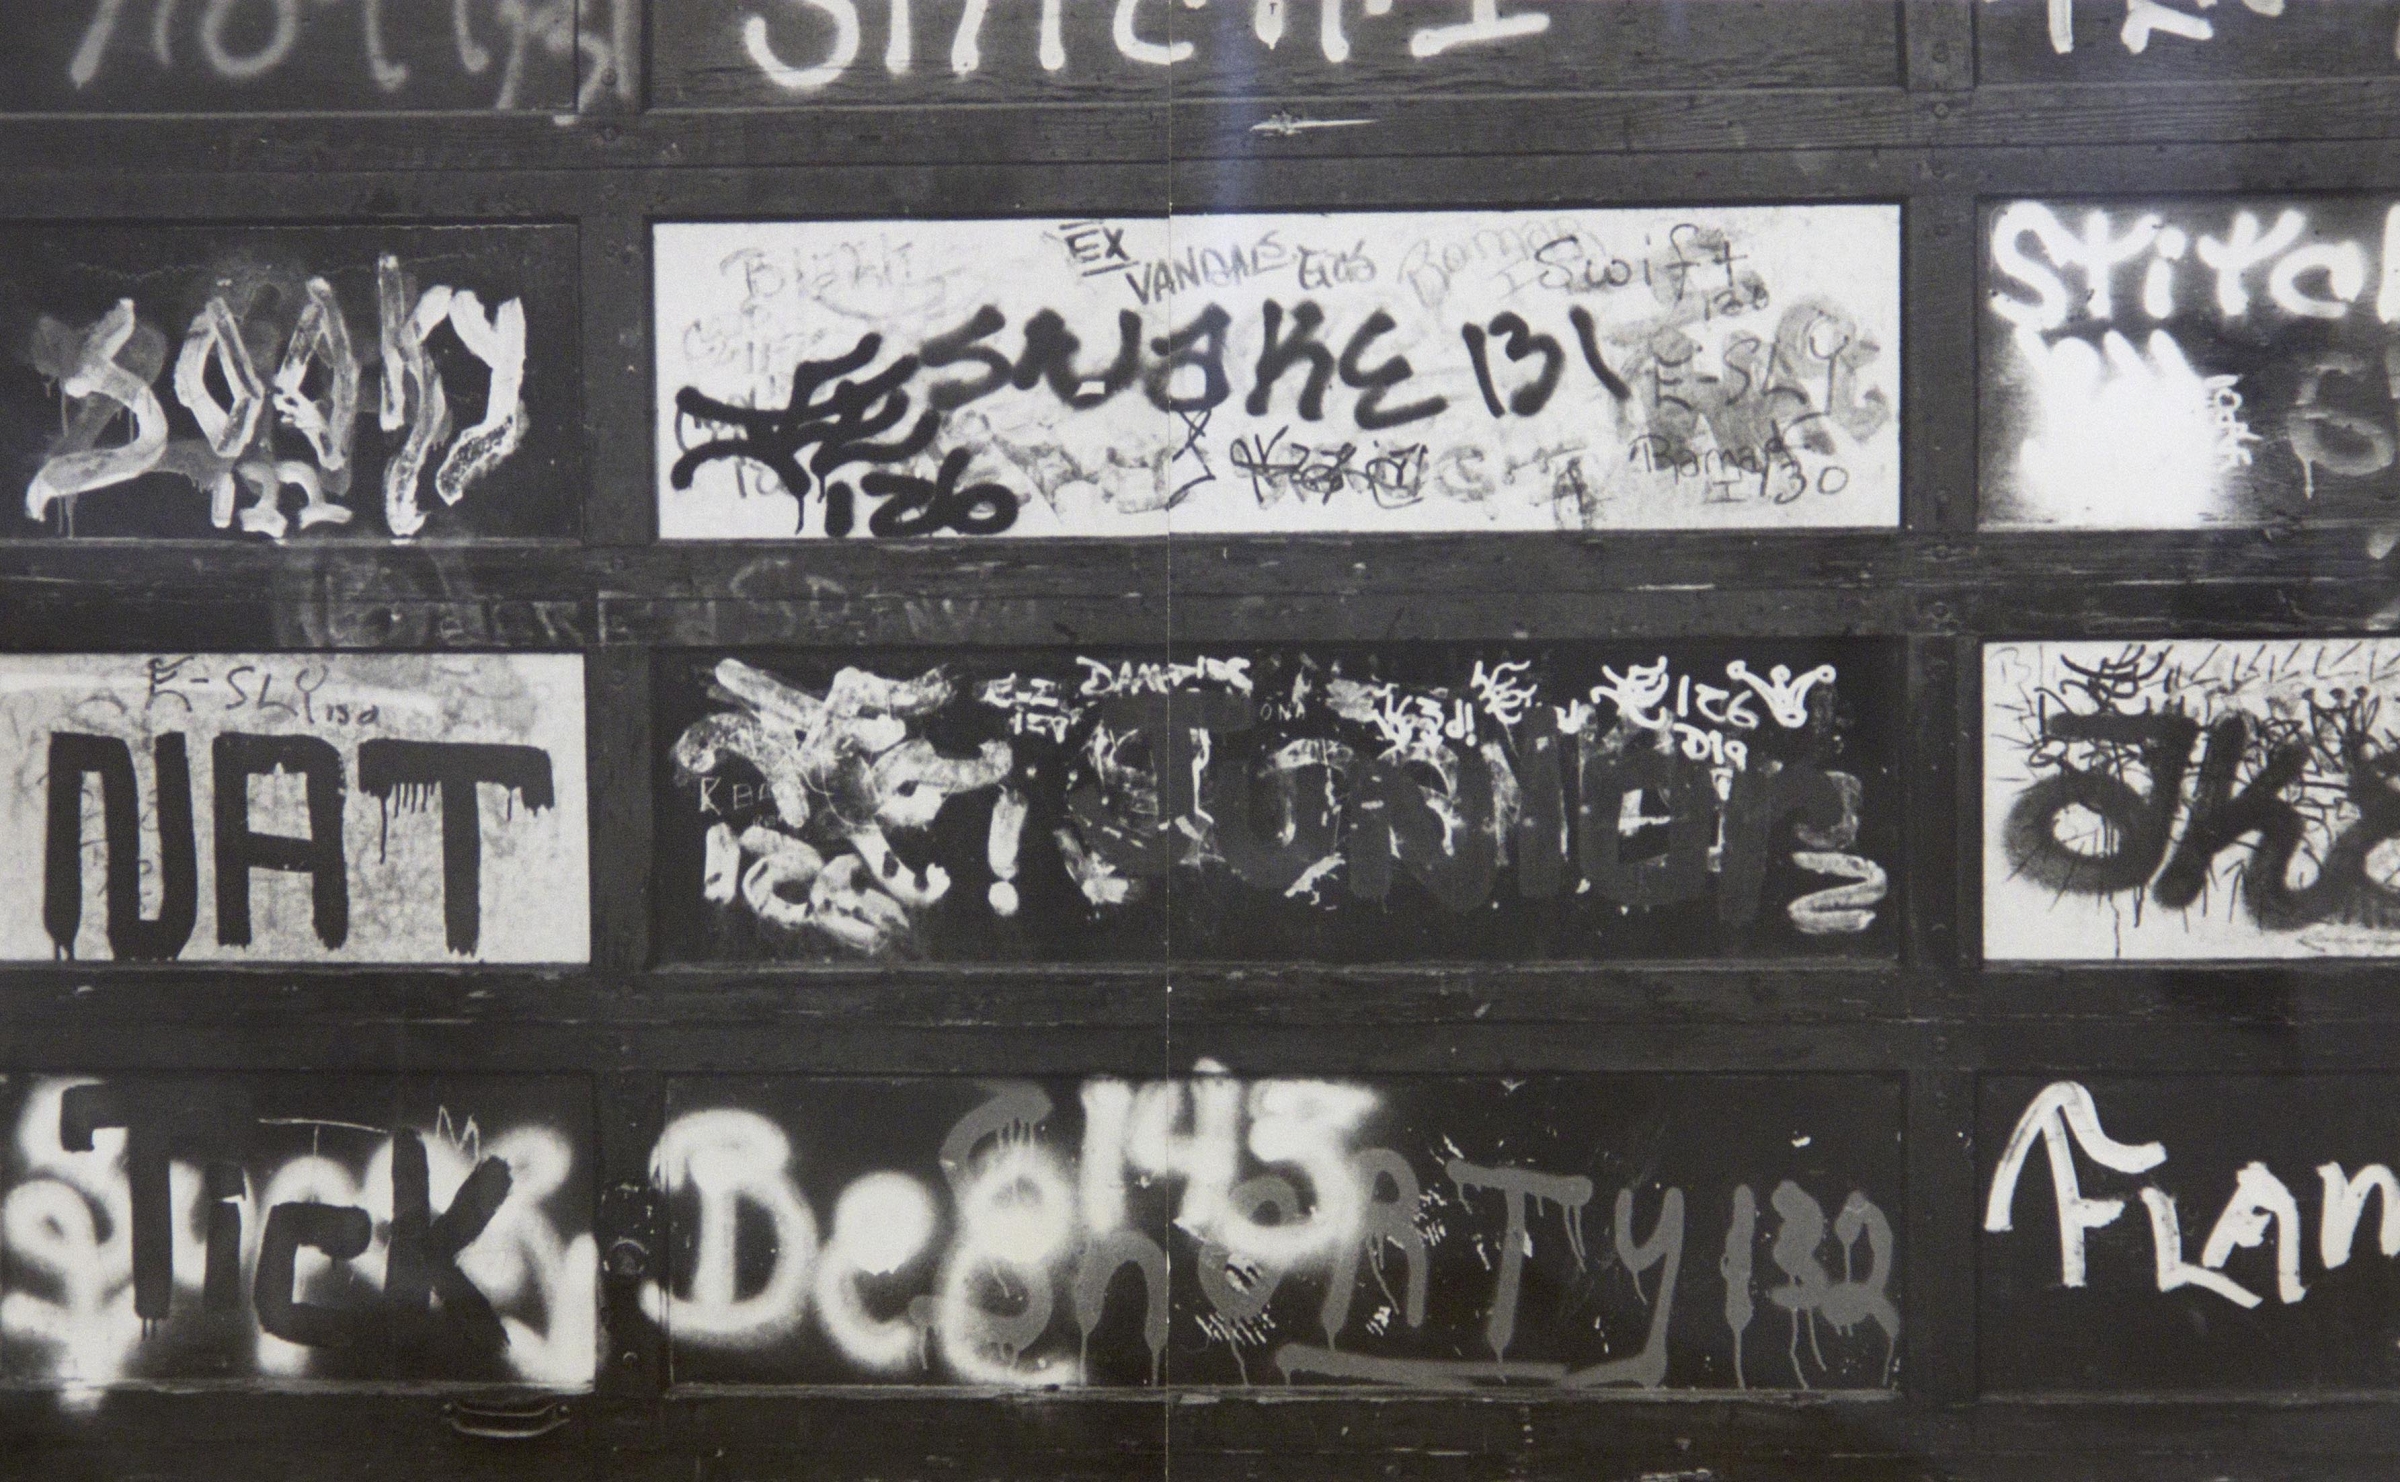 Gordon Matta-Clark
Graffiti (Nat), 1973
black and white diptych photograph&amp;nbsp;
20 x 31 3/4 inches
&amp;copy; 2020 Estate of Gordon Matta-Clark / Artists Rights Society (ARS), New York
Courtesy The Estate of Gordon Matta-Clark and David Zwirner